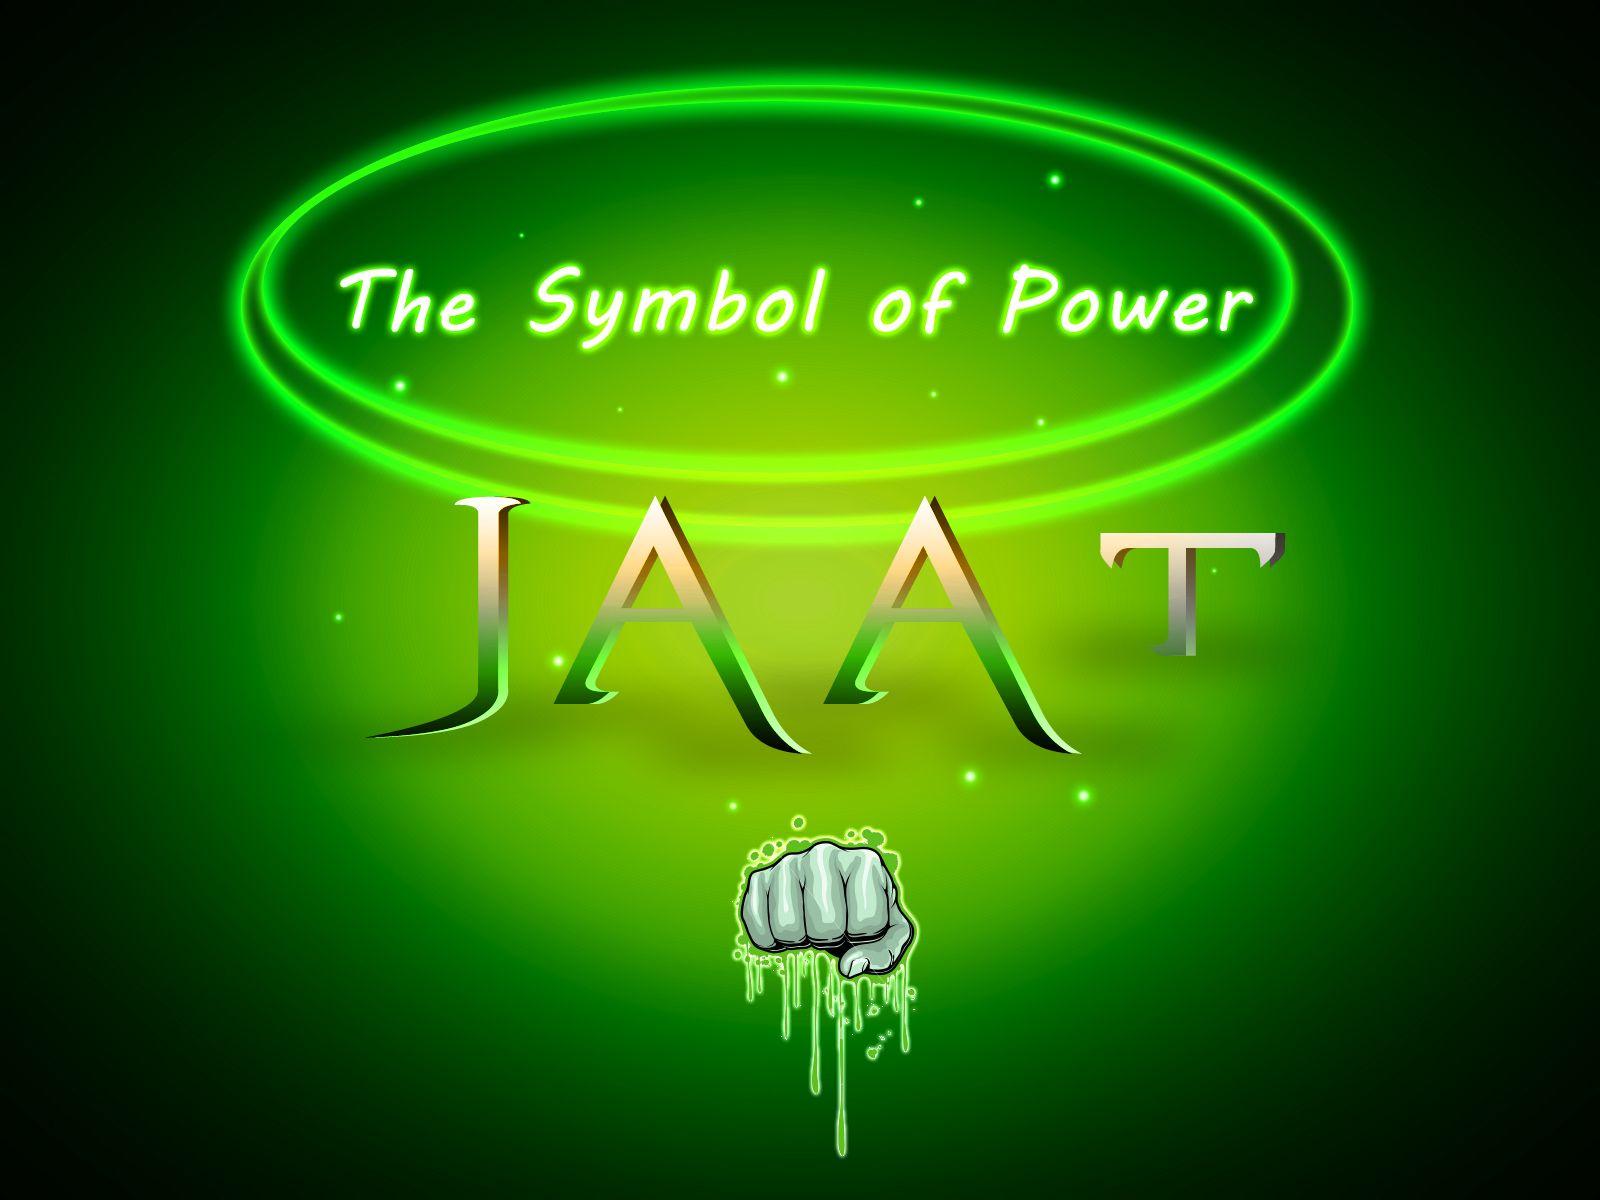 Download Jatt Rules wallpaper to your cell phone punjabi